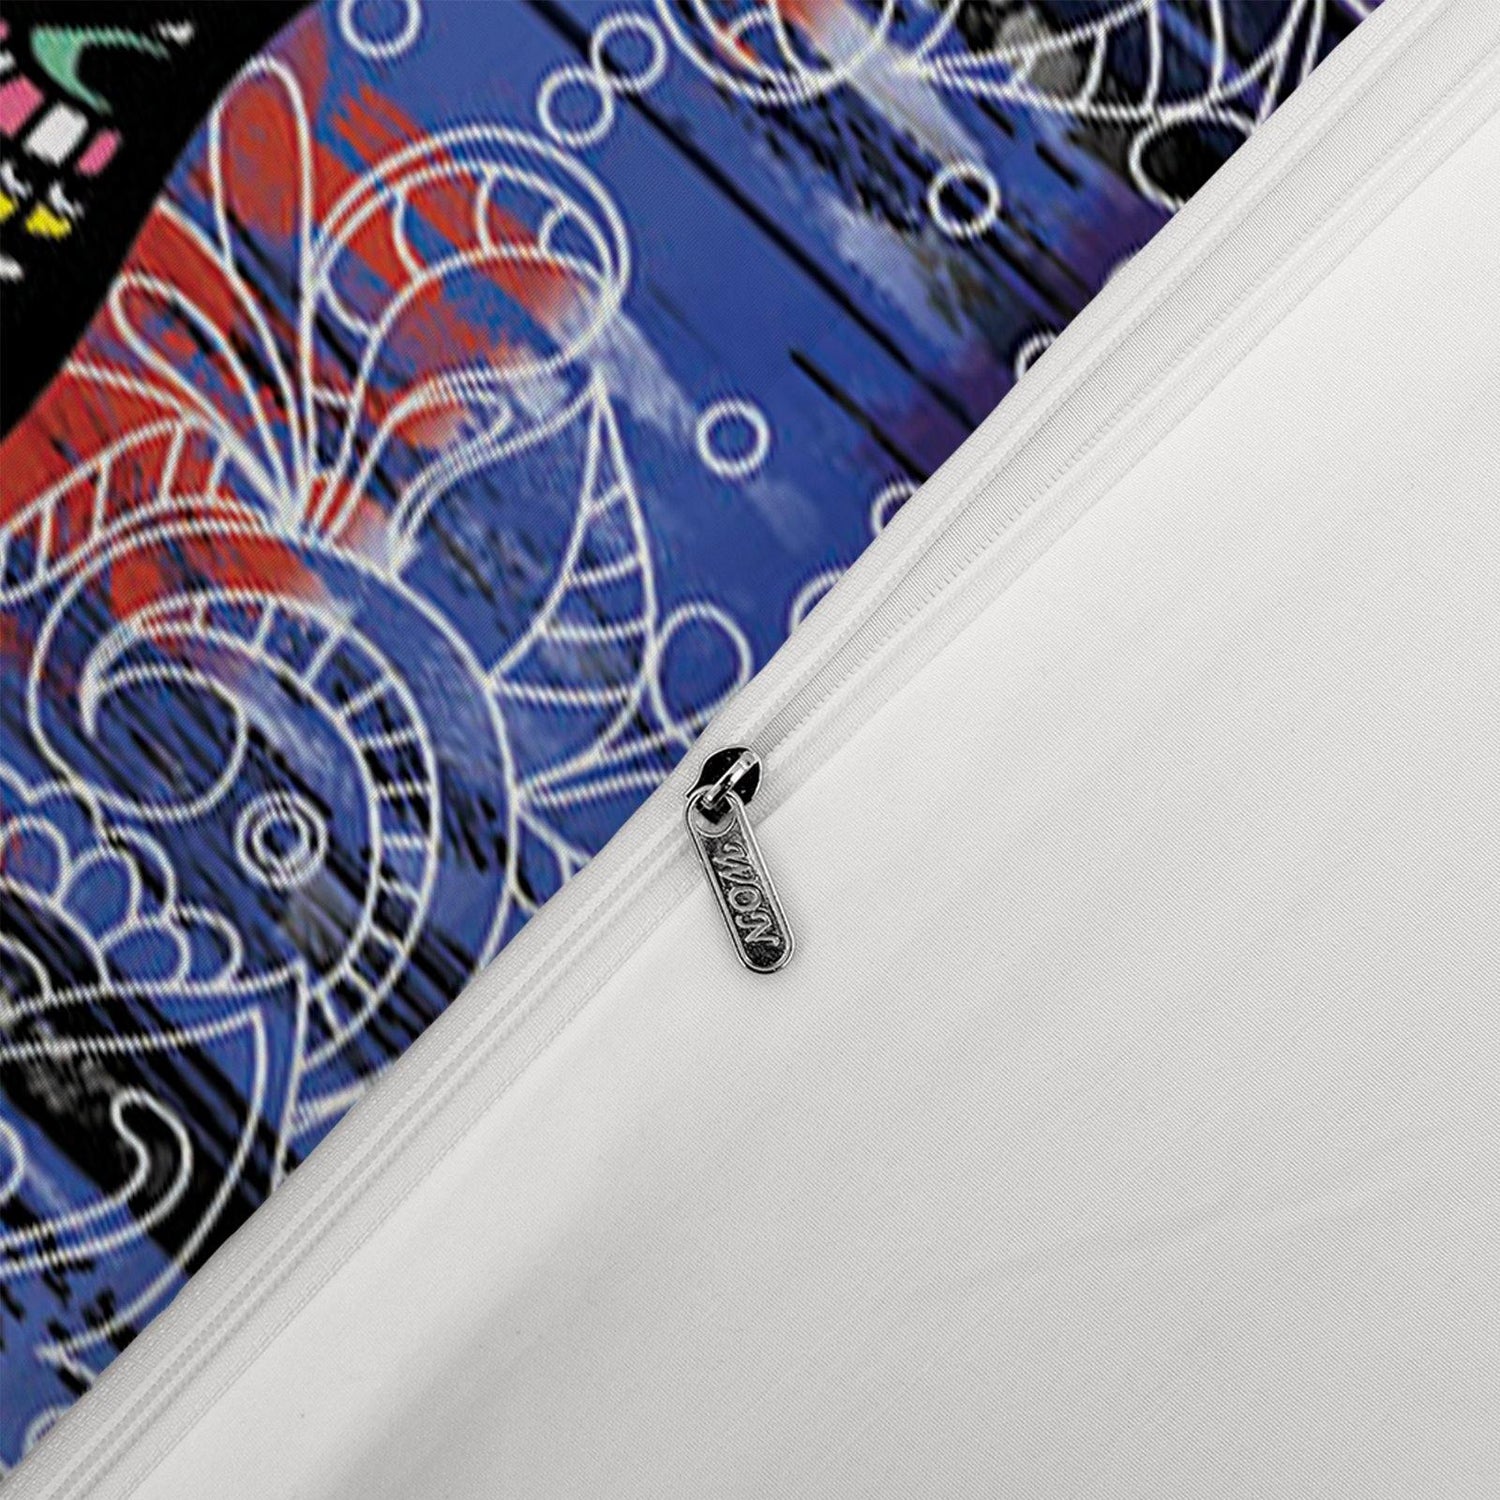 WONGS BEDDING Color elephant print duvet cover set bedding bedroom home kit - Wongs bedding